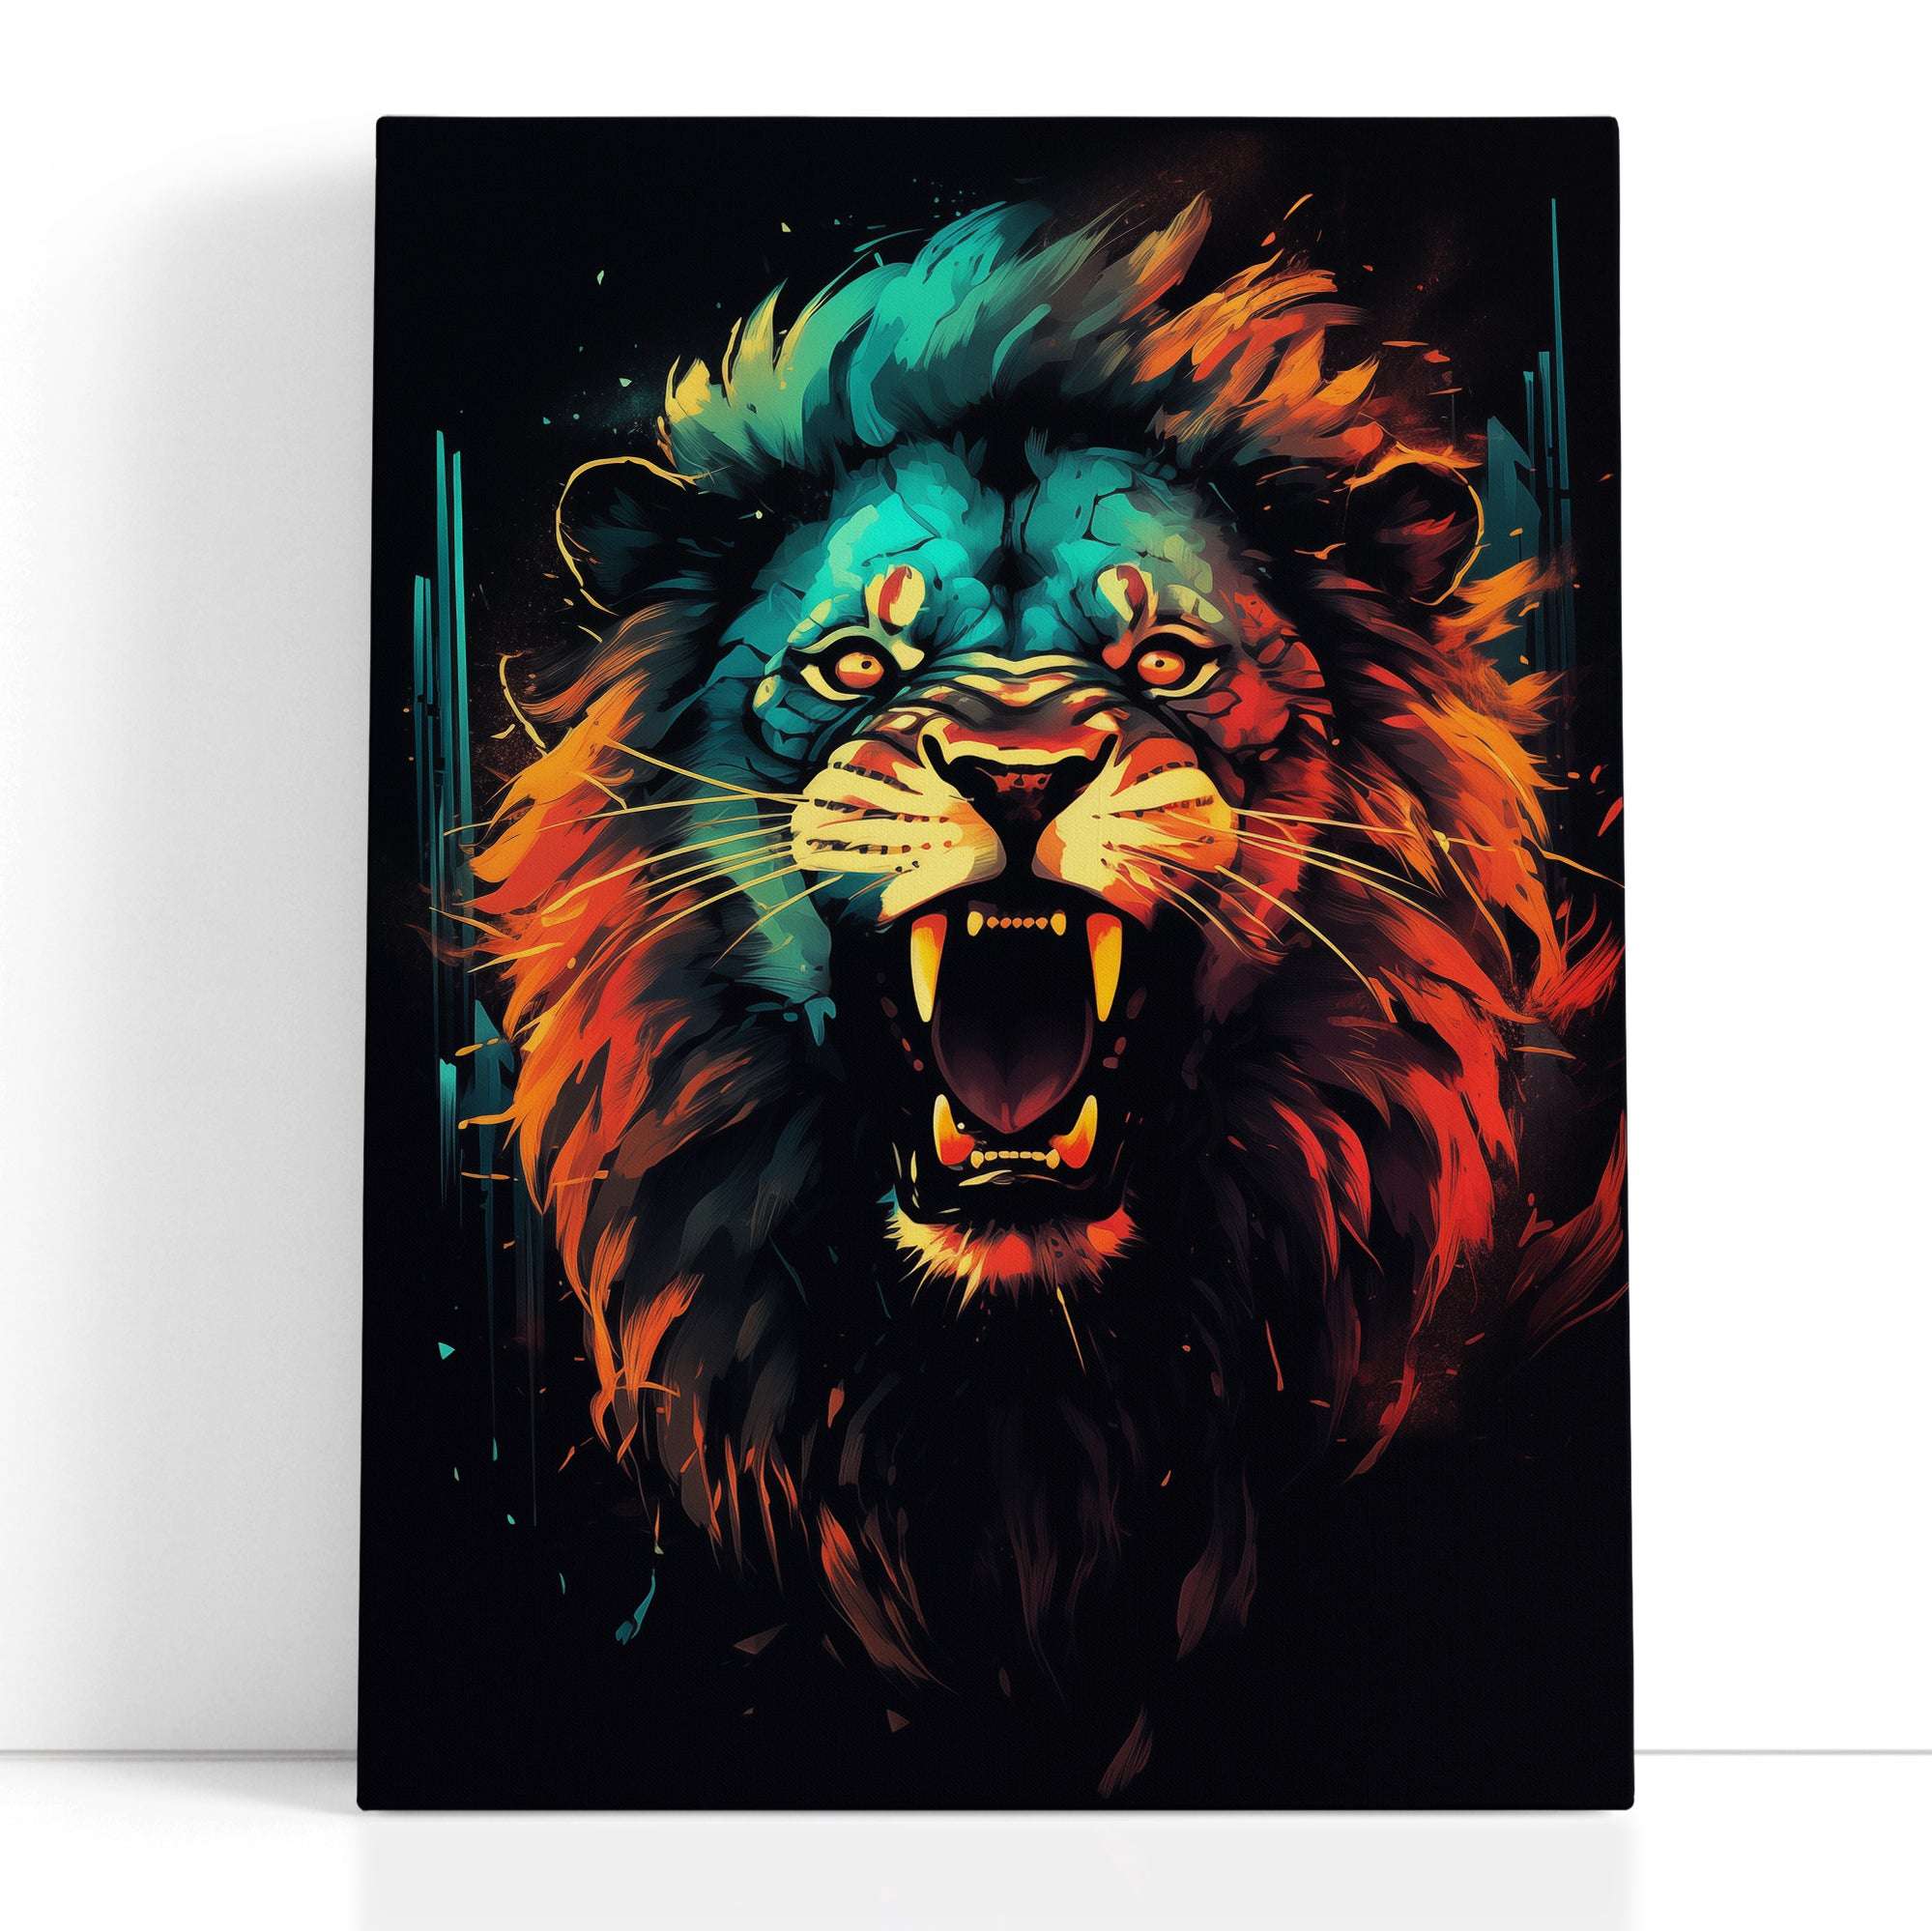 Regal Poise of the Wild Lion - Canvas Print - Artoholica Ready to Hang Canvas Print